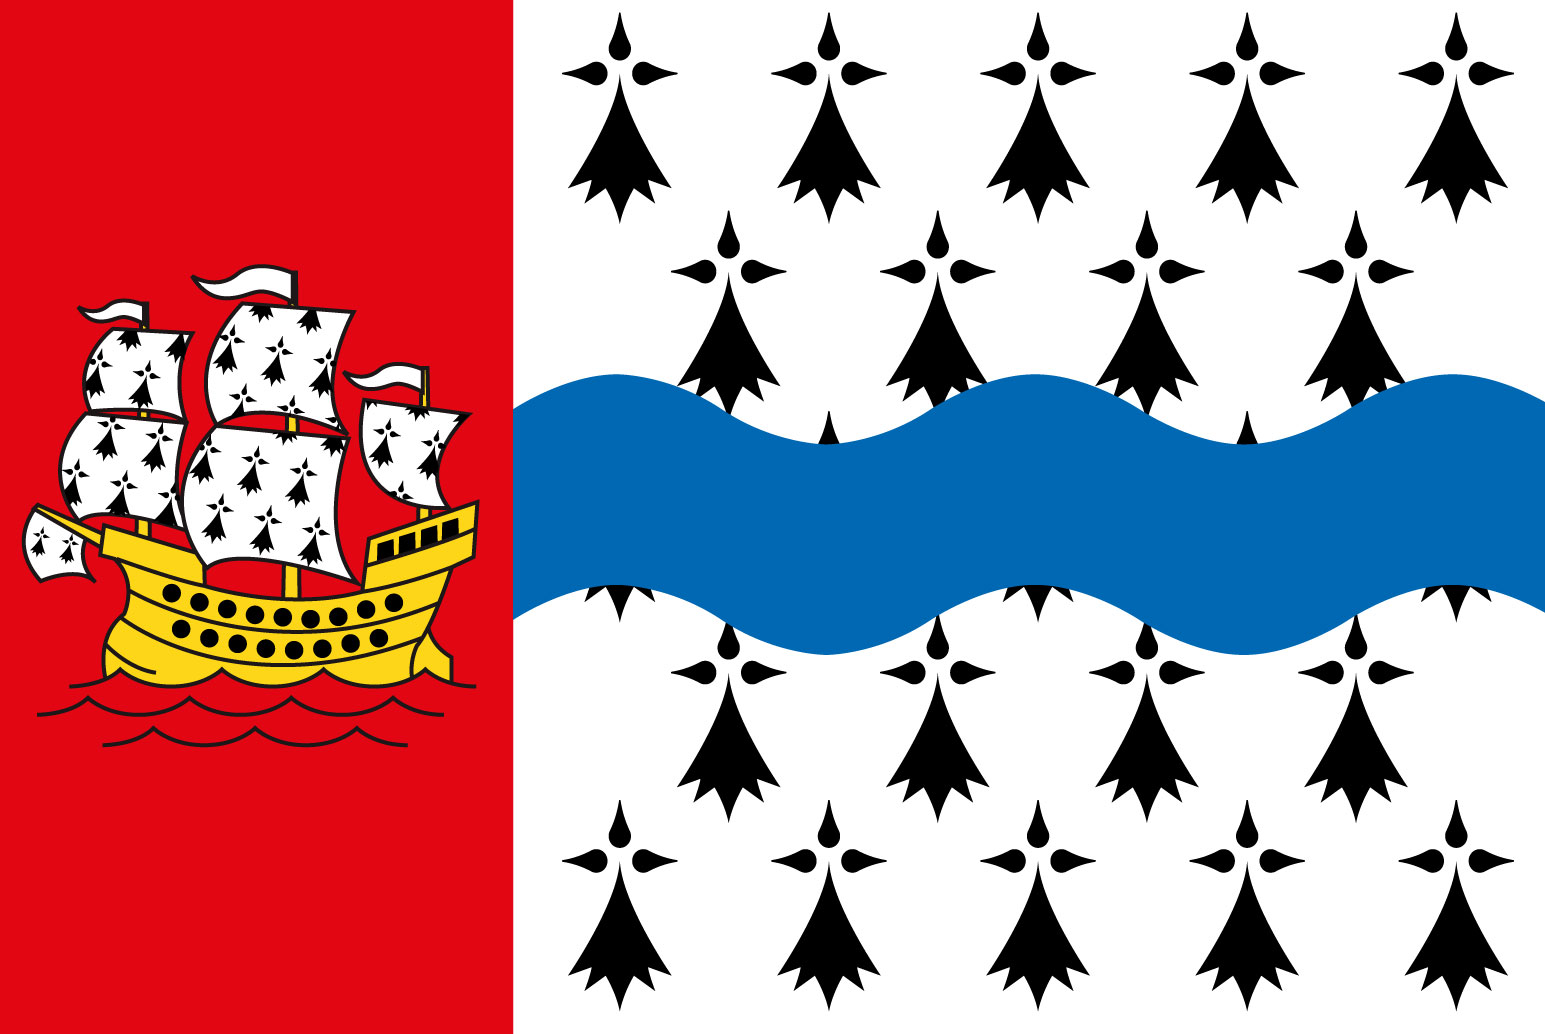 Drapeau de la Bretagne — Wikipédia